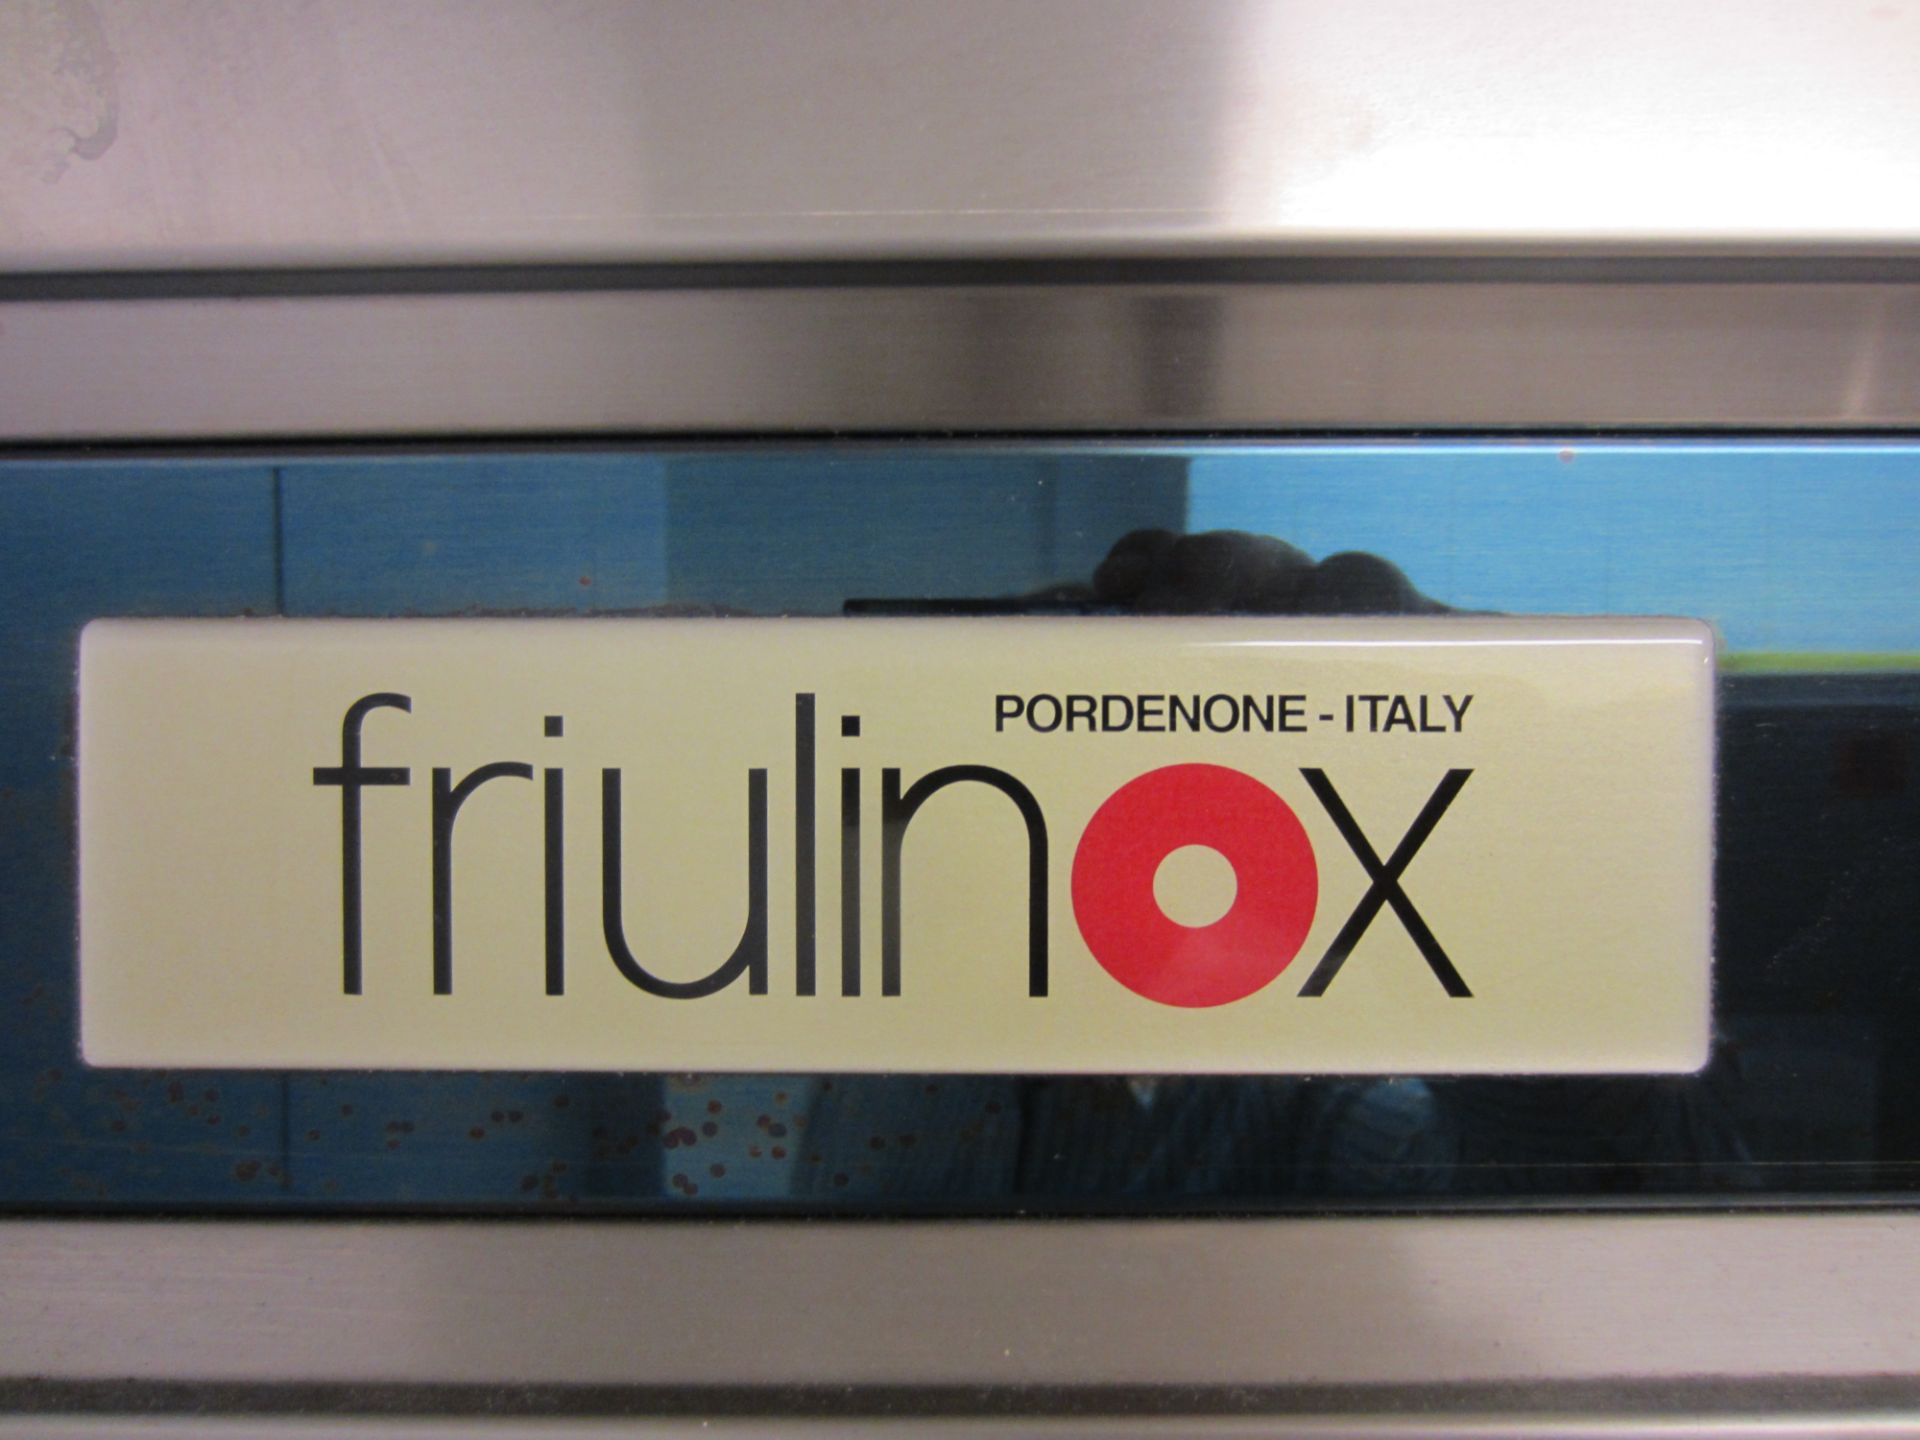 Friulinox Stainless Steel Double Door Commercial Refrigerator - Image 2 of 2